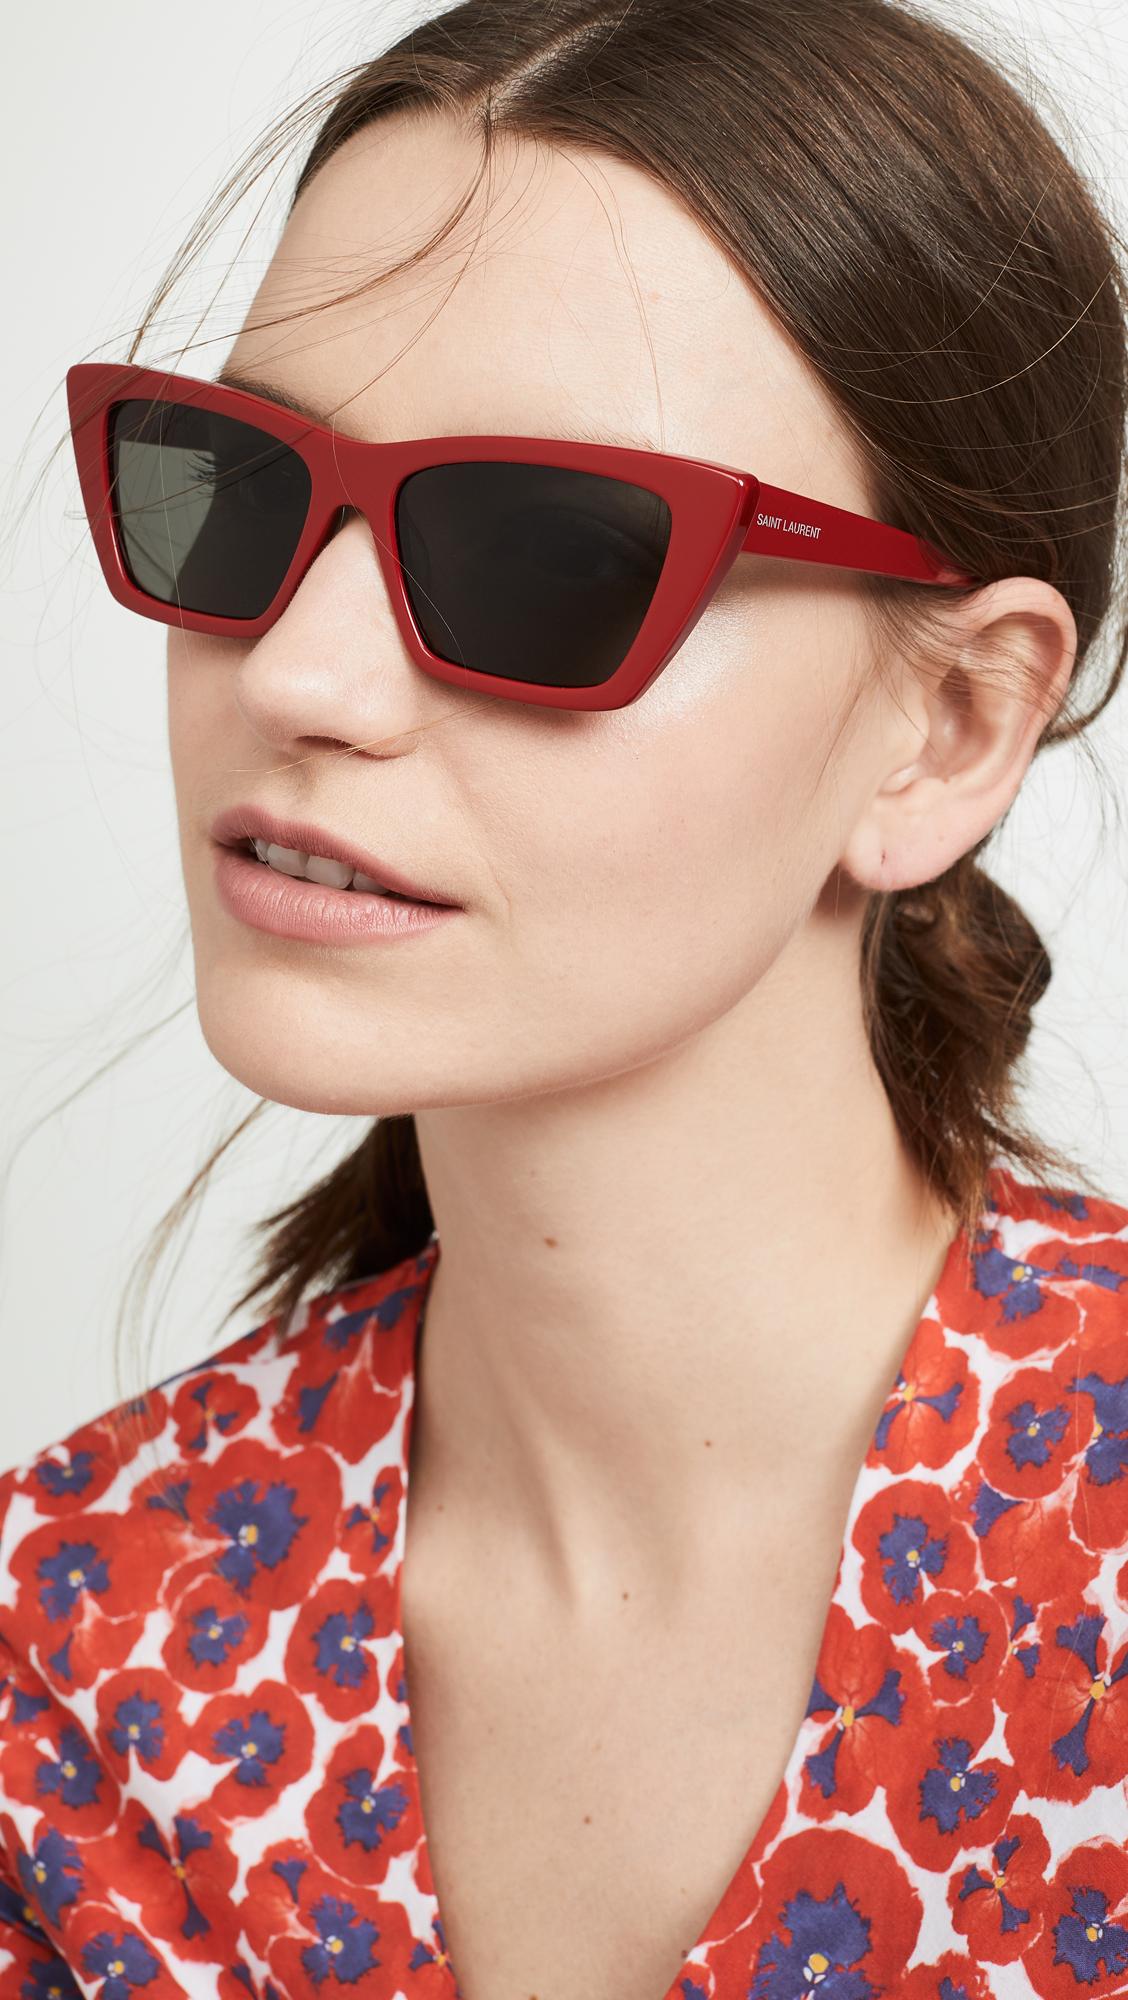 Saint Laurent Narrow Cat Eye Sunglasses in Red/Grey (Red) - Lyst